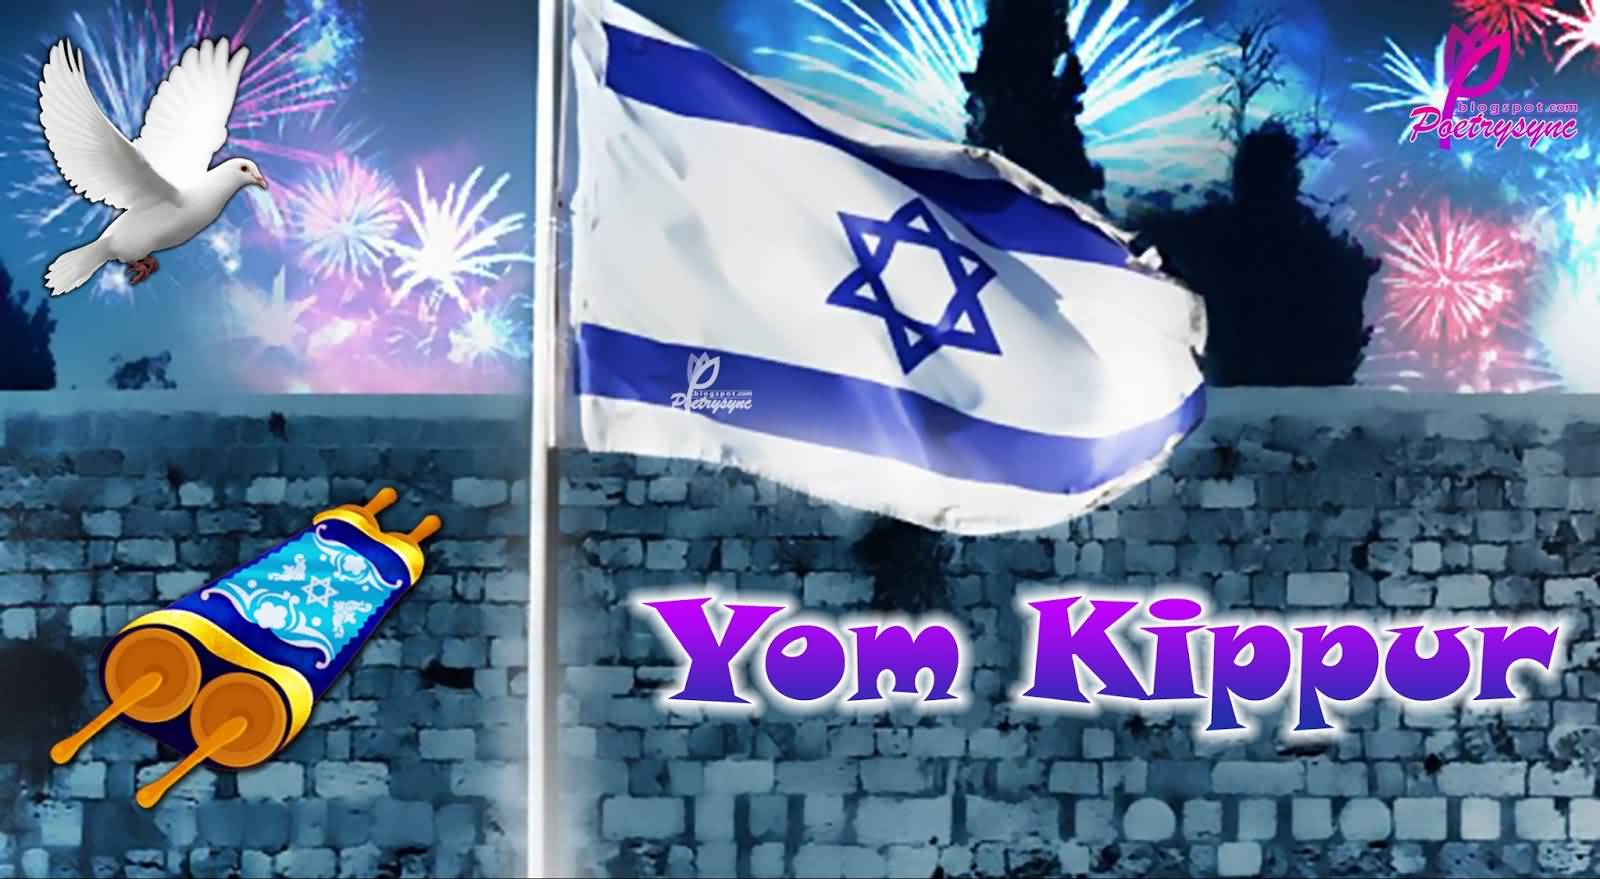 Wonderful Yom Kippur Wishes, Greetings & Image